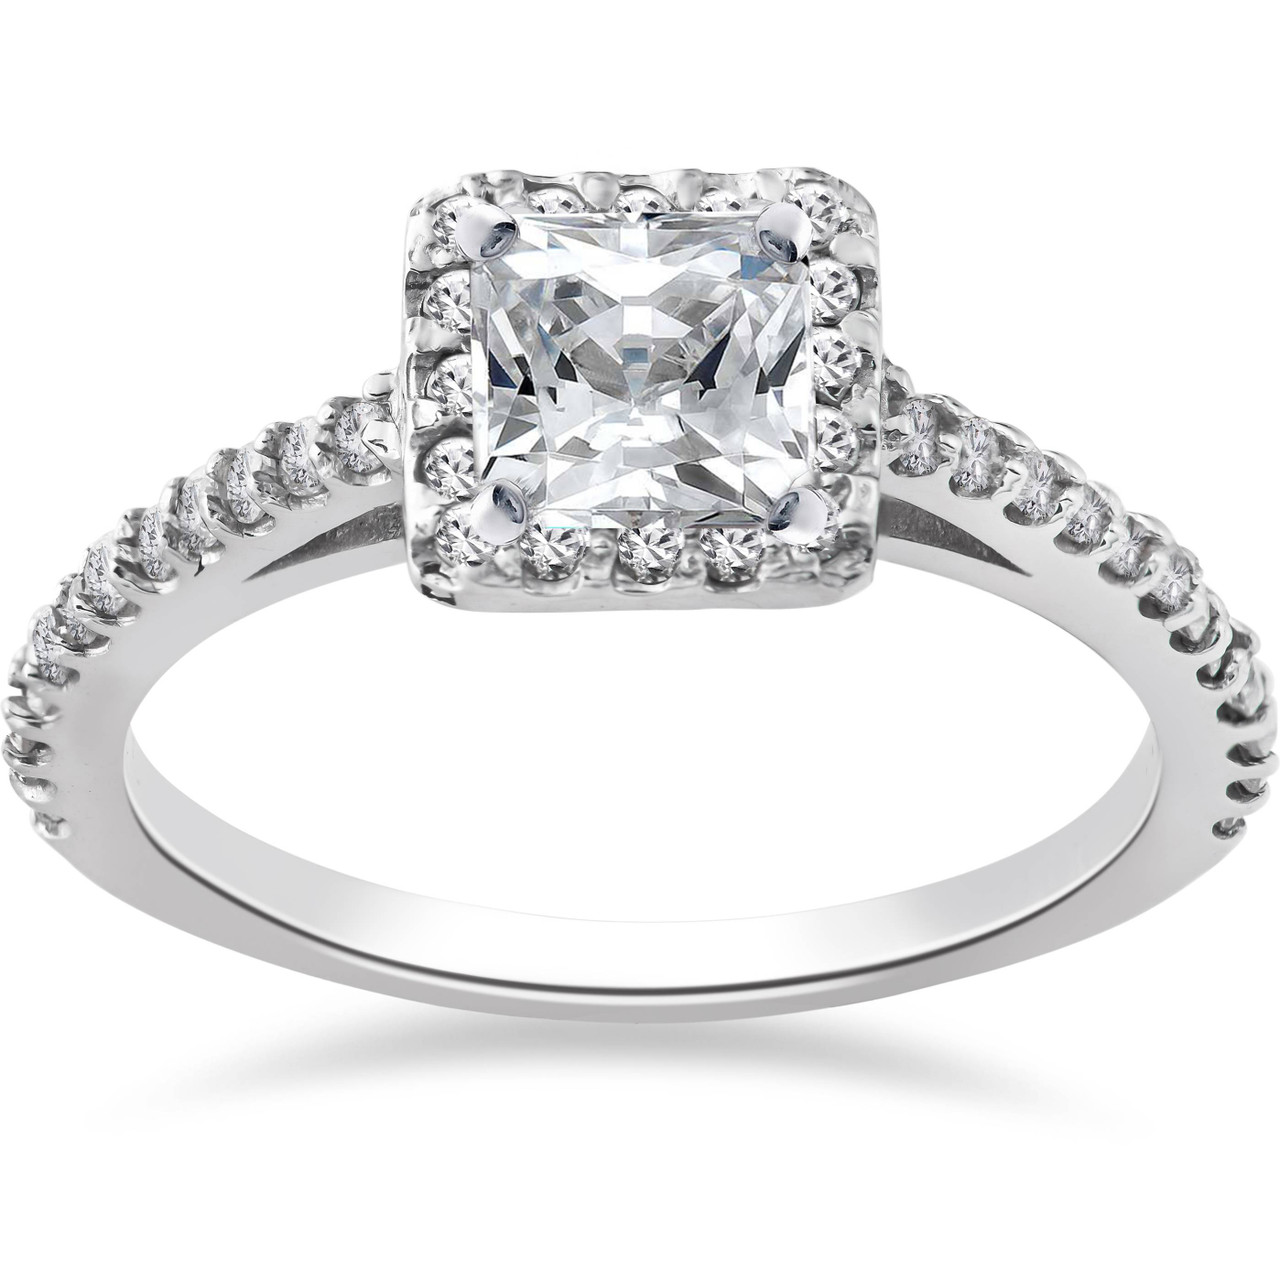 1 Carat Princess cut Diamond ring by Scott Kay design… - Gem